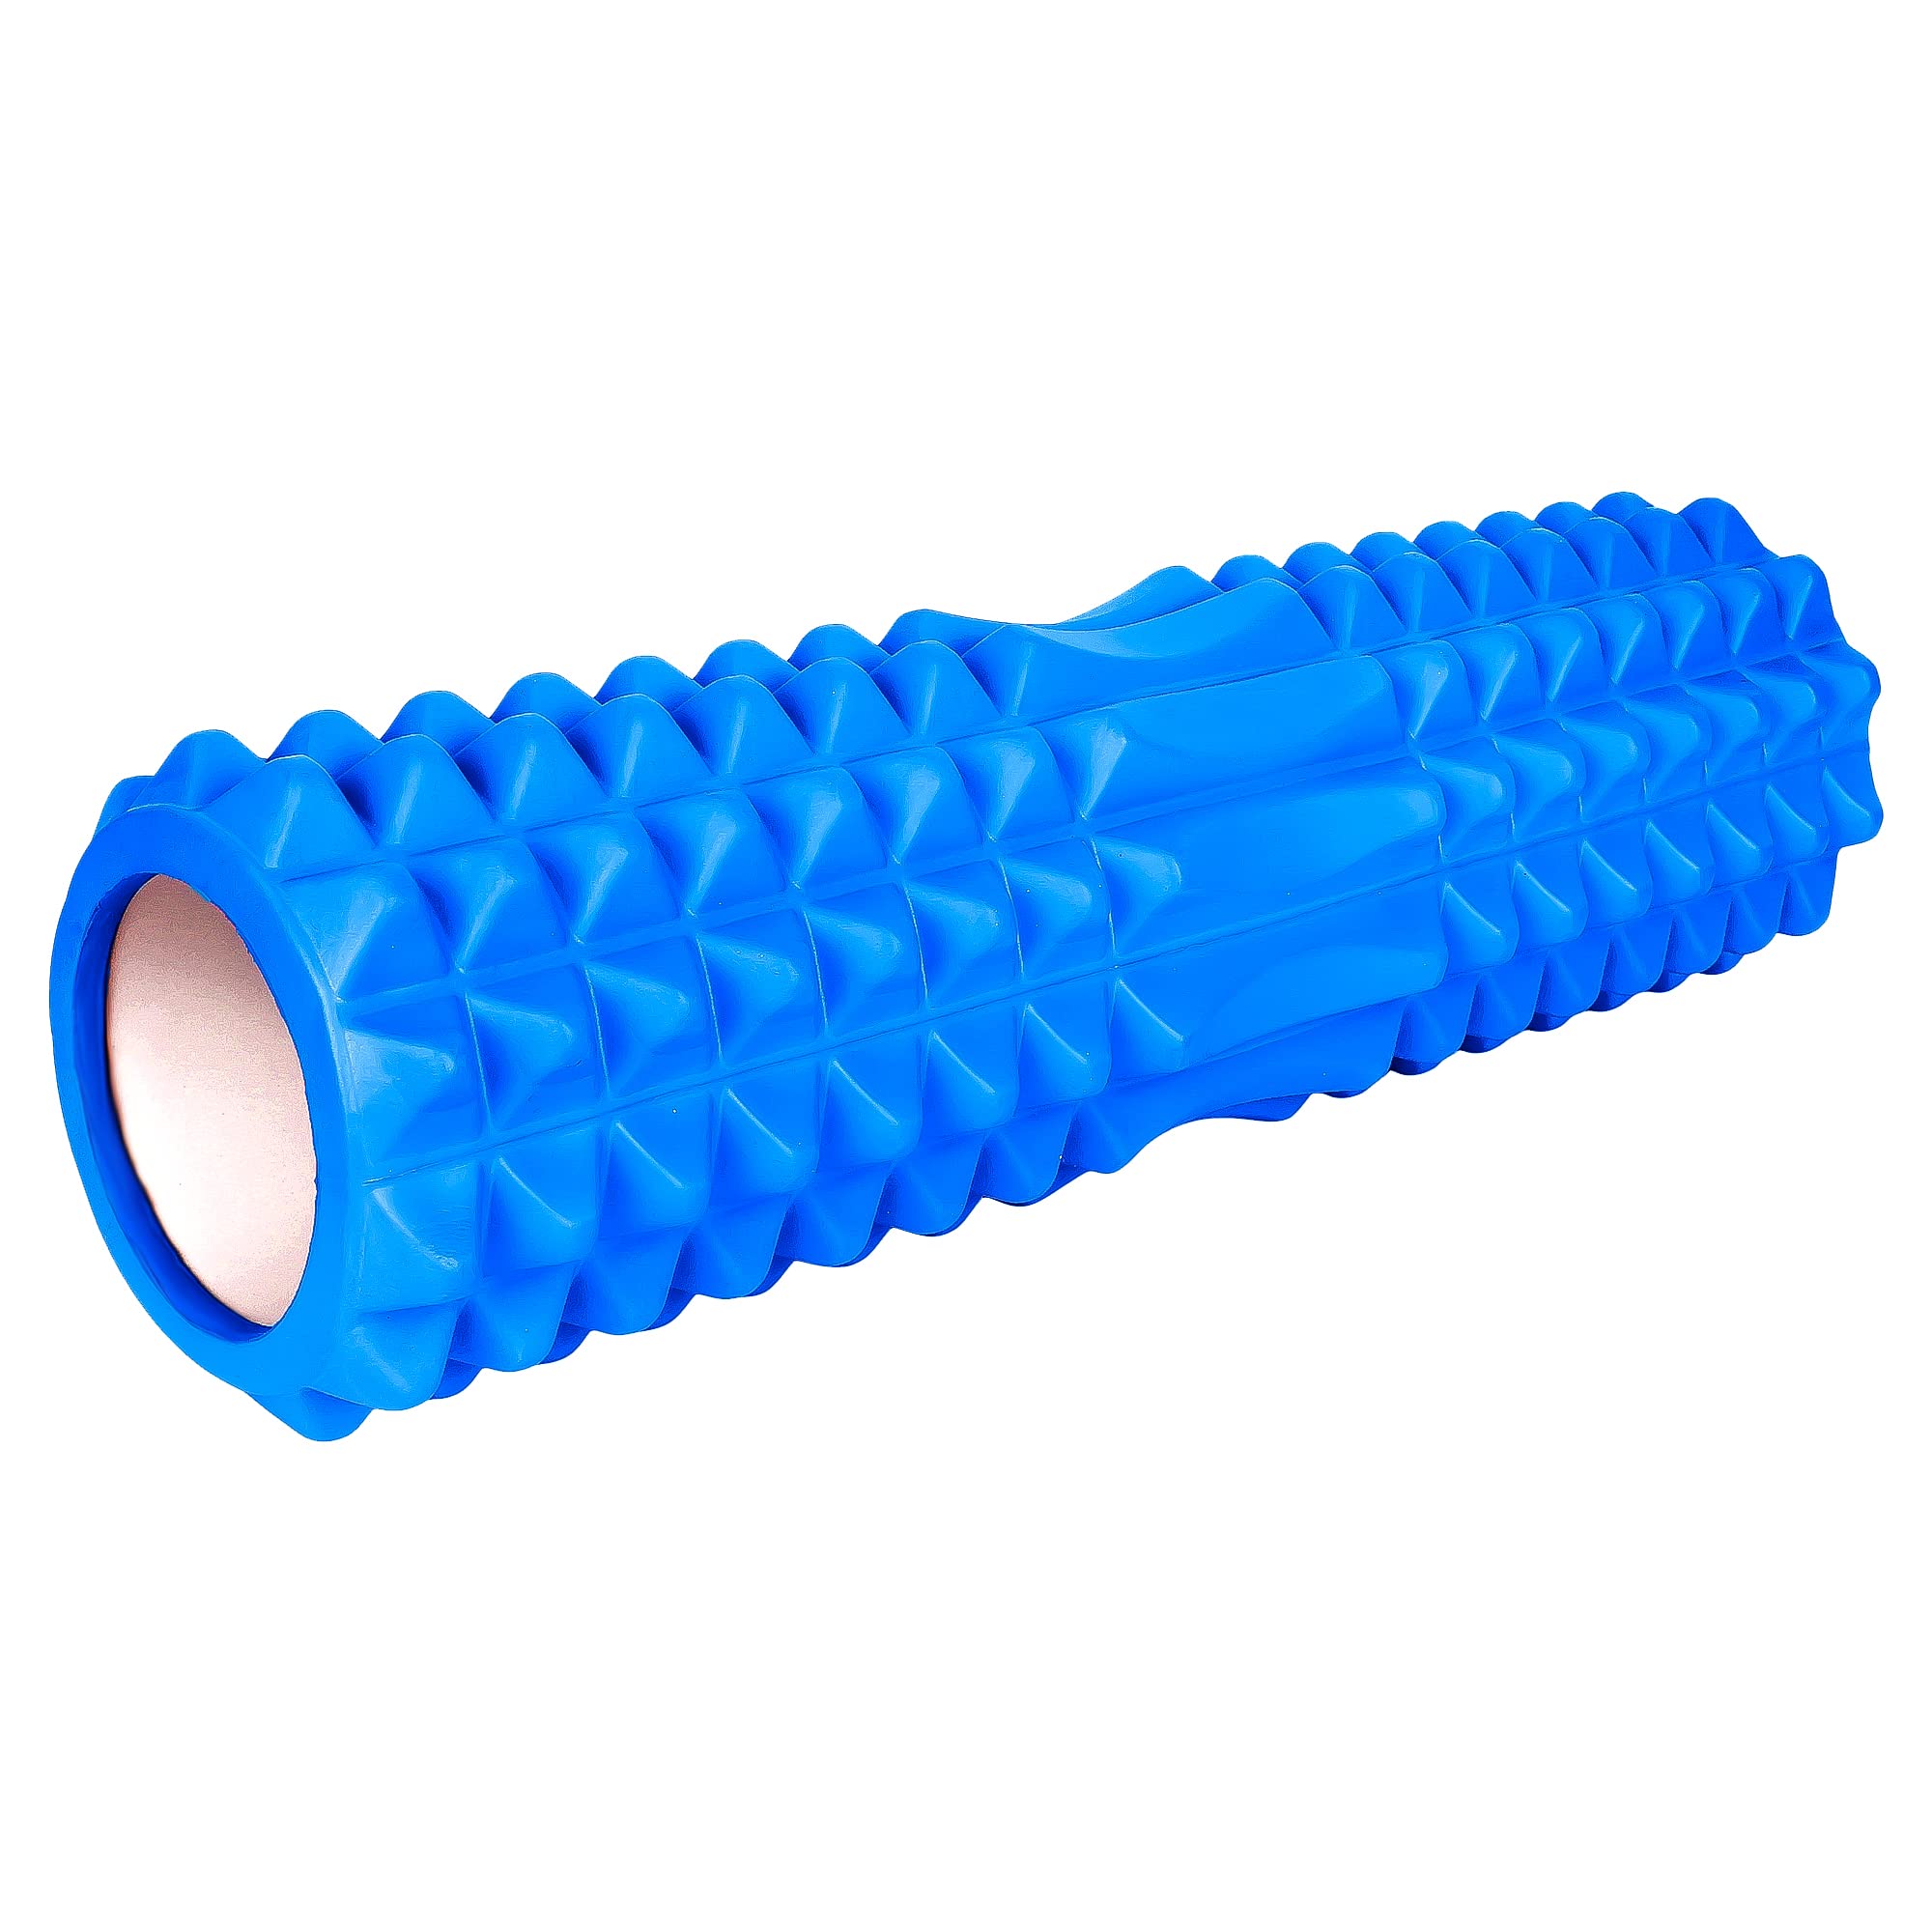 Strauss Grid Foam Roller, 33 cm, (Blue)